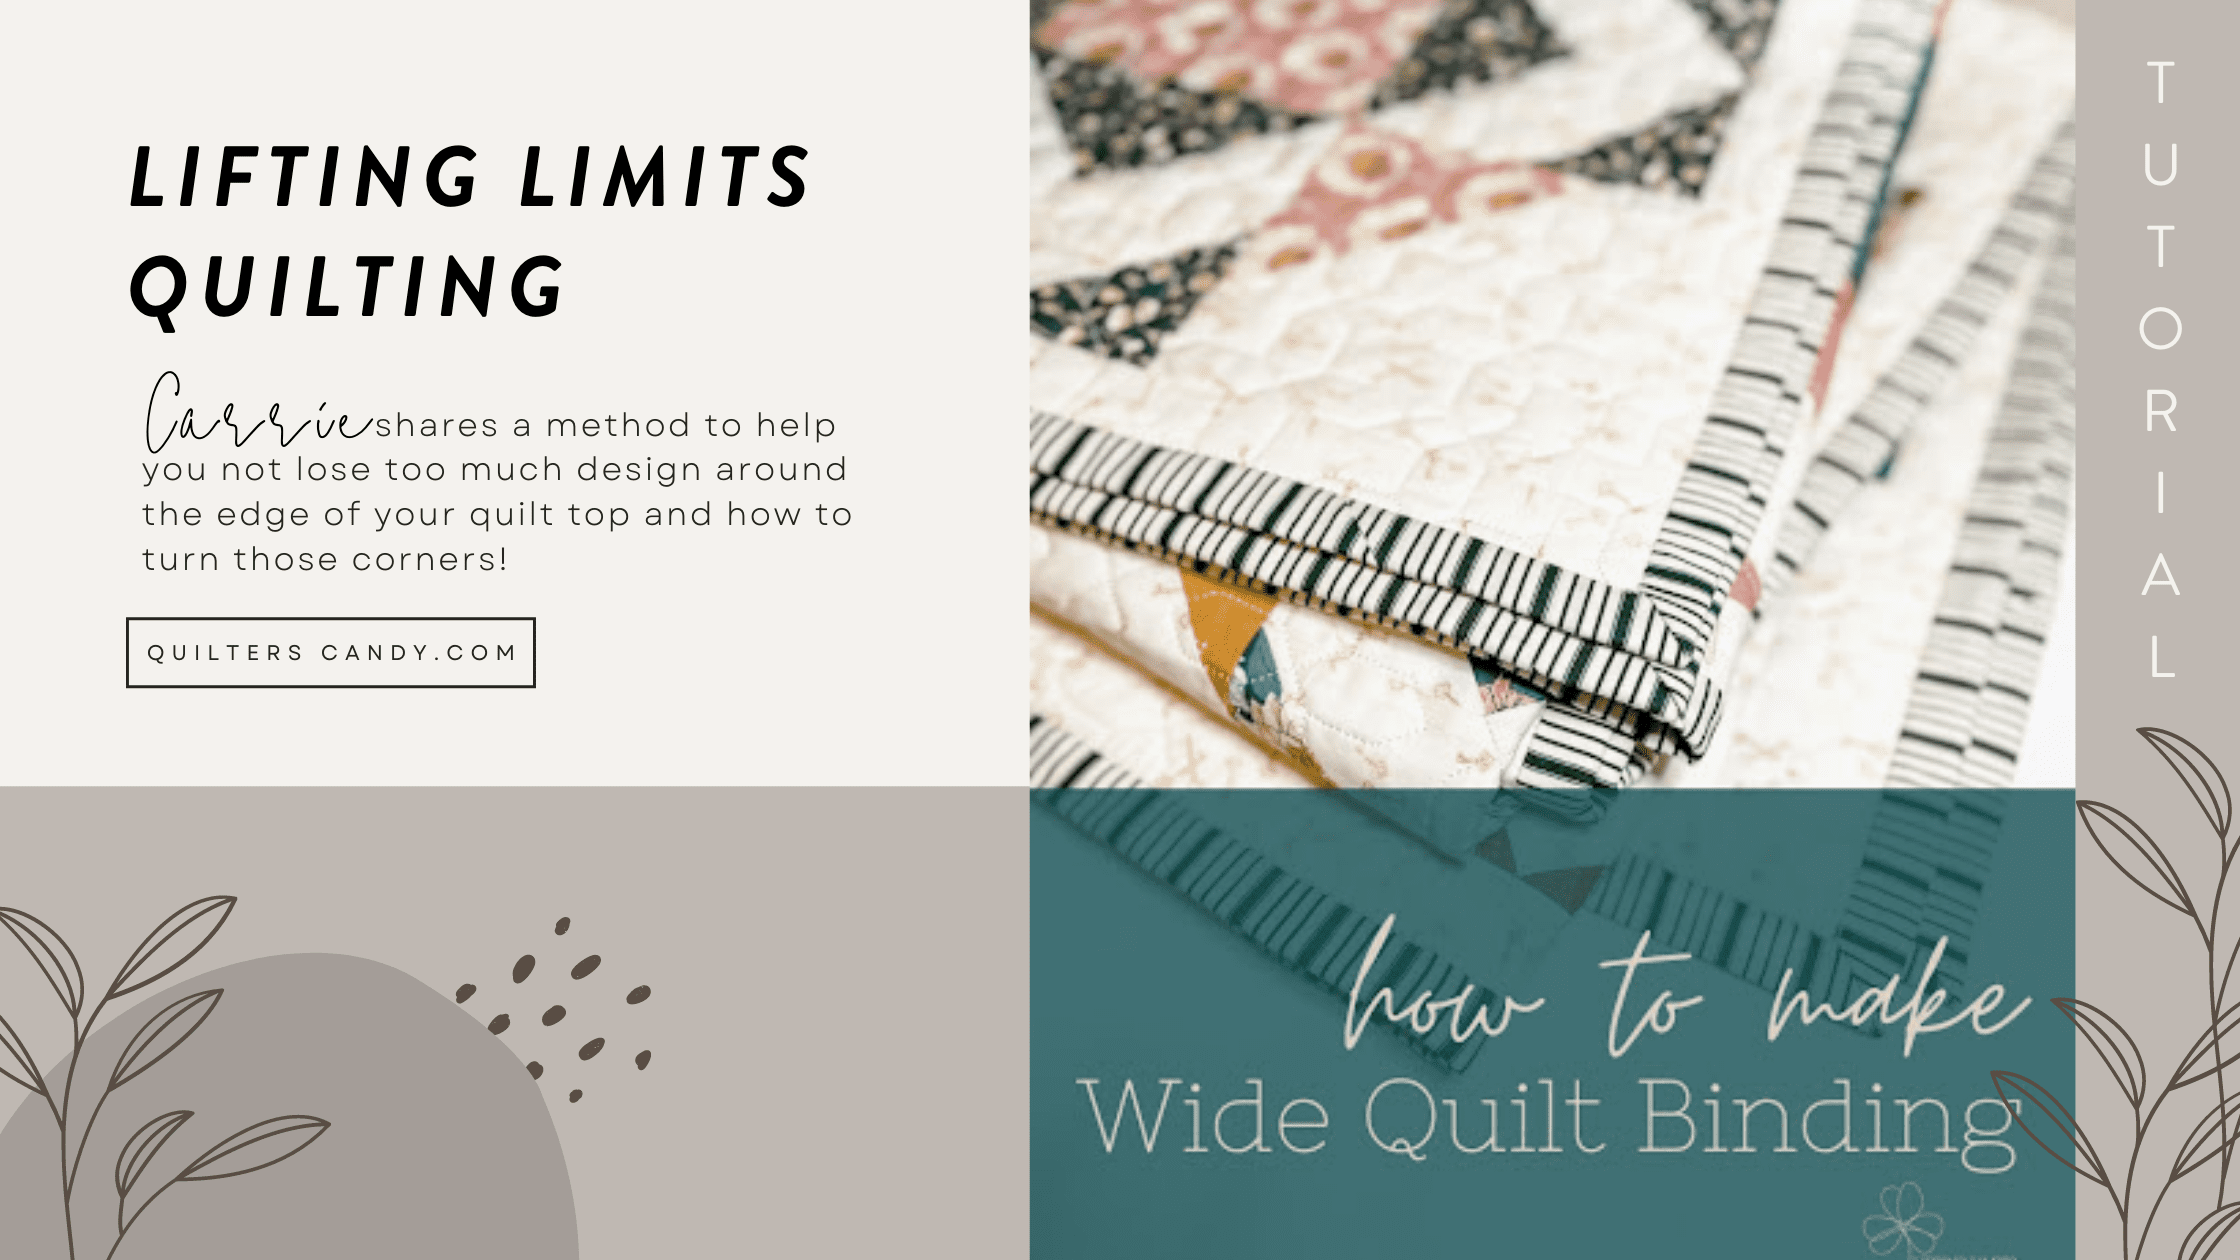 Wide Quilt Binding photo blog banner